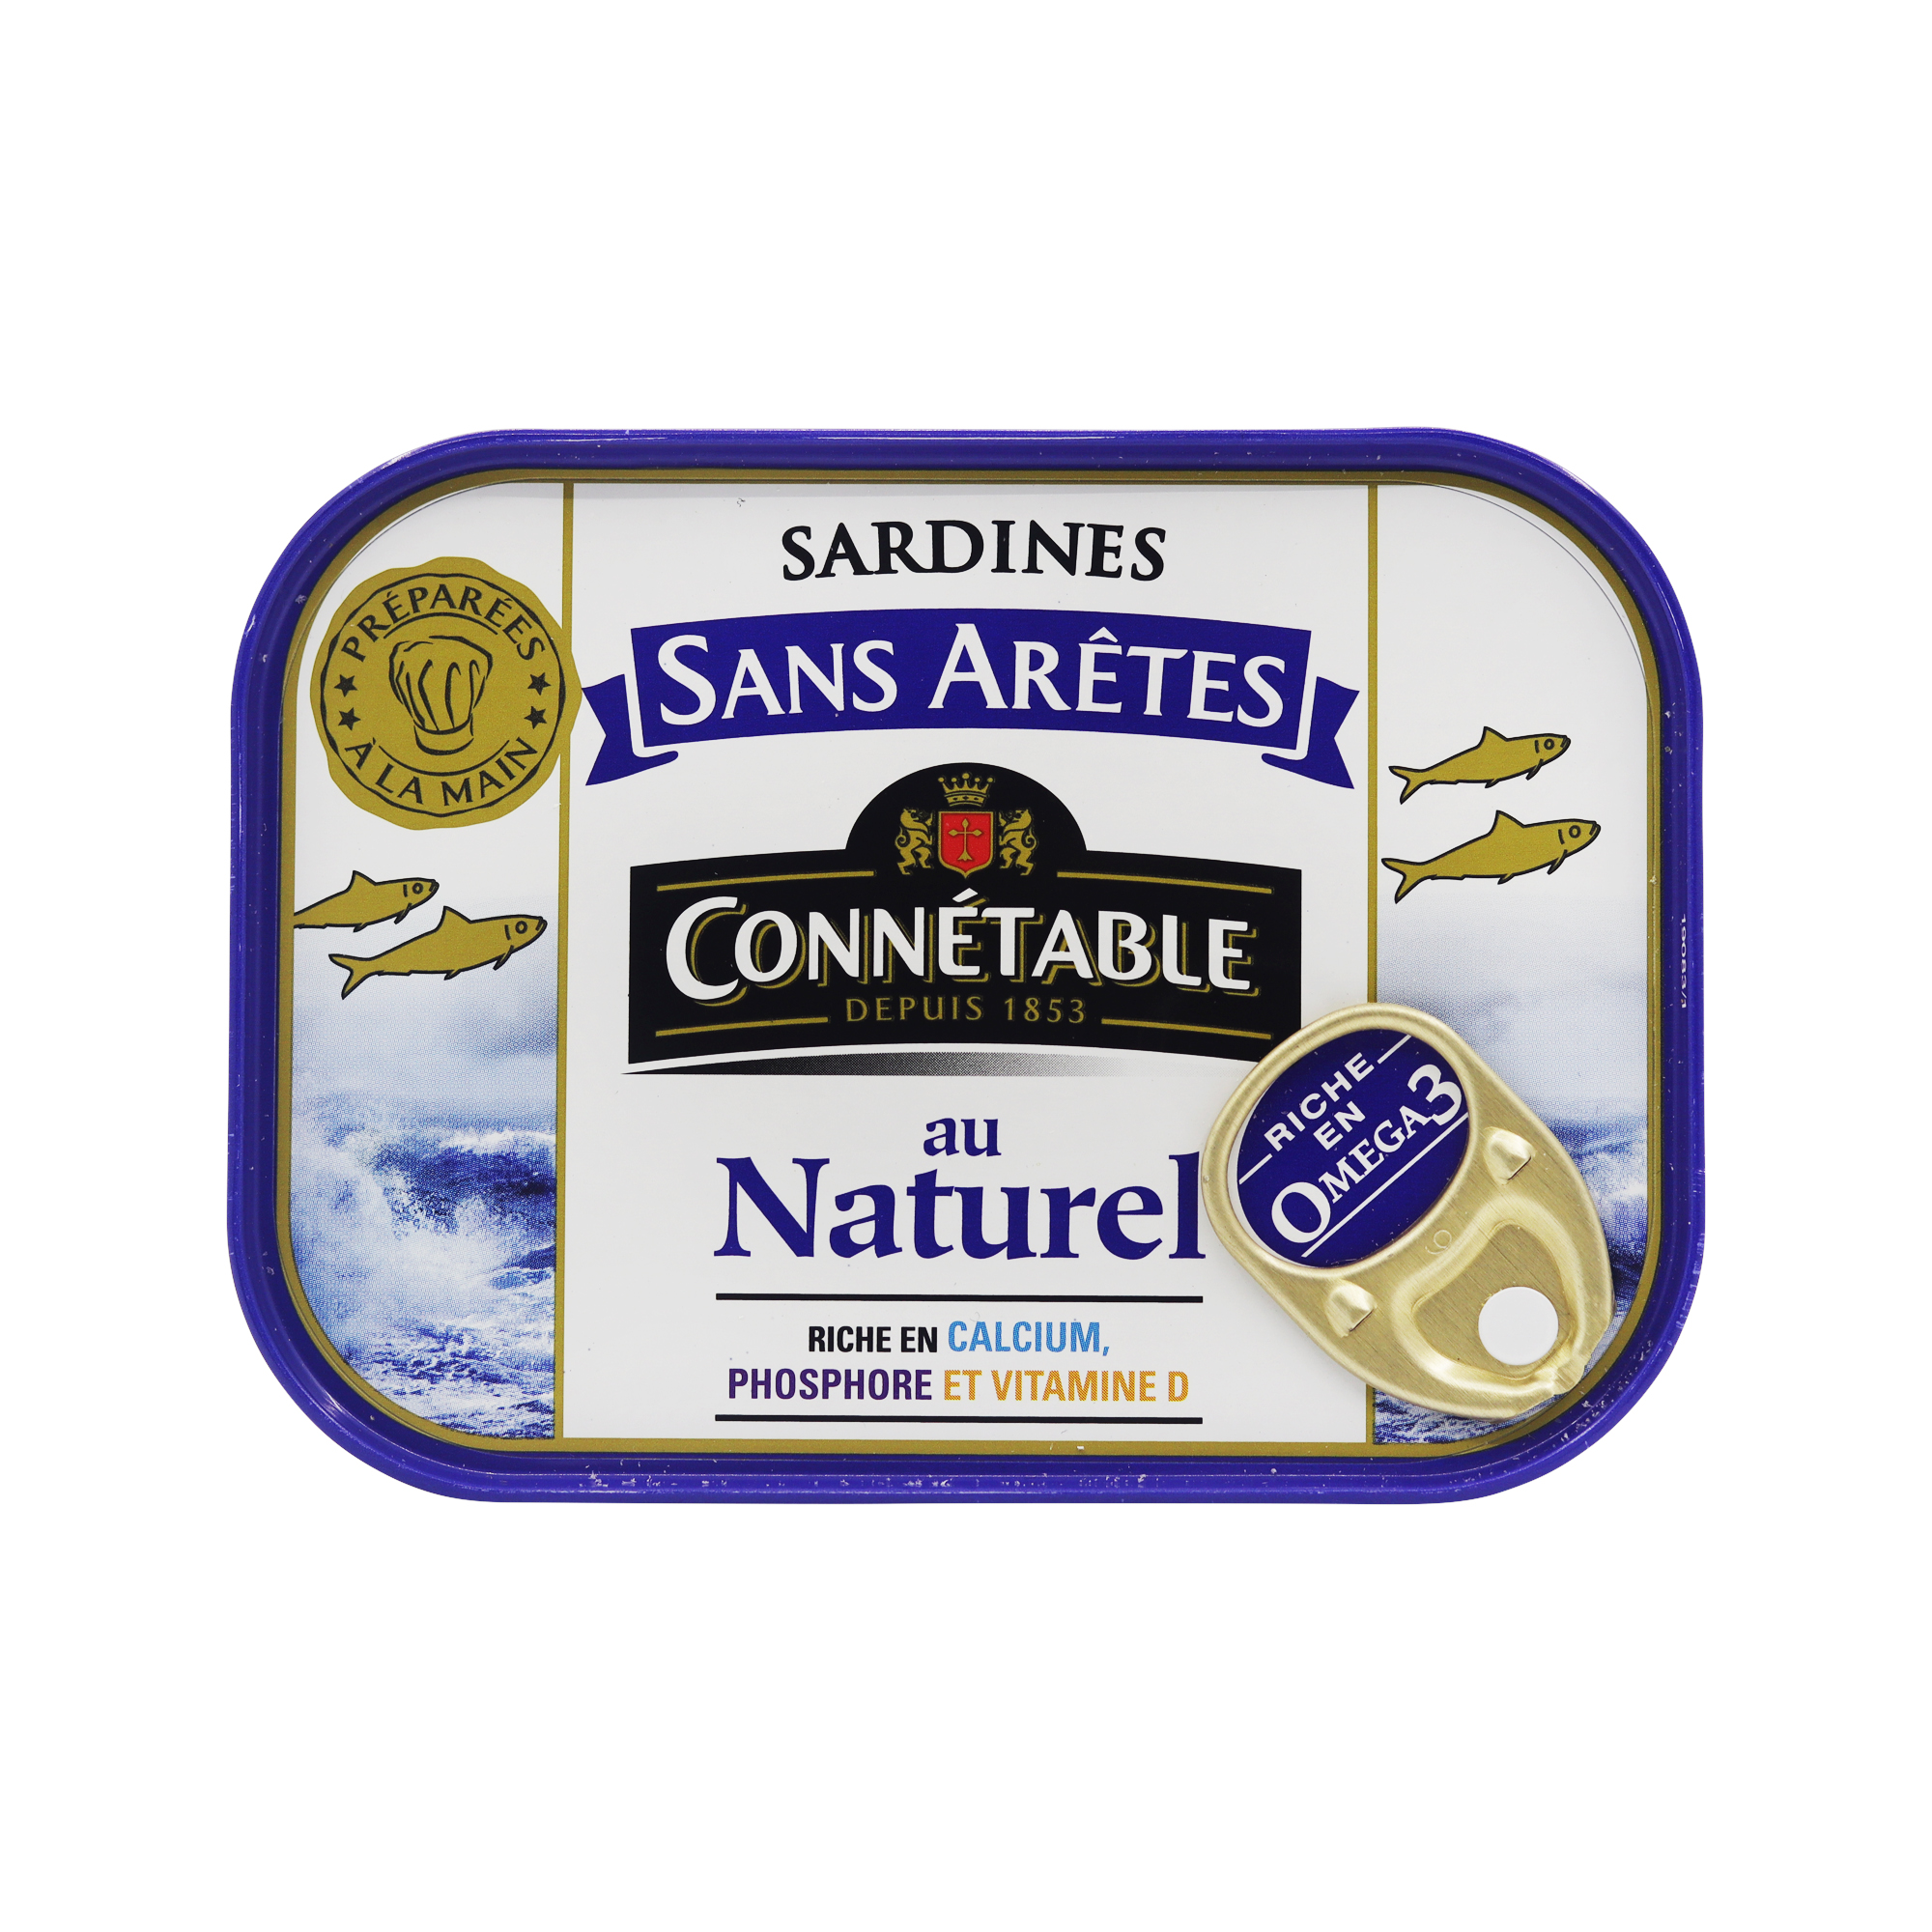 Connetable Bonesless sardines in water 140g